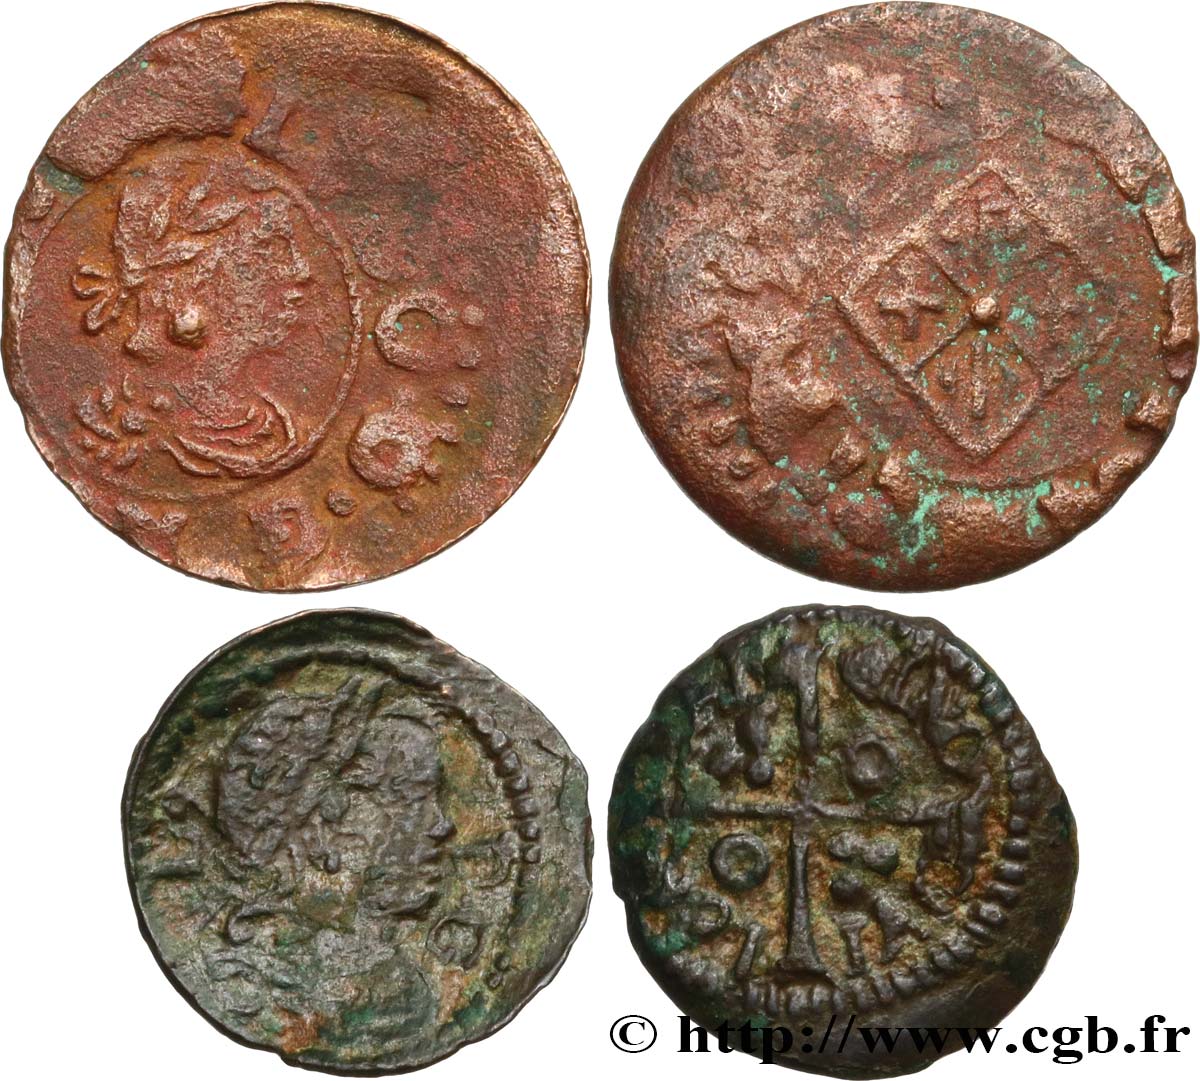 SPANIA - PRINCIPAUTY OF CATALONIA - LOUIS XIII Lot de 2 monnaies royales n.d. Ateliers divers VF